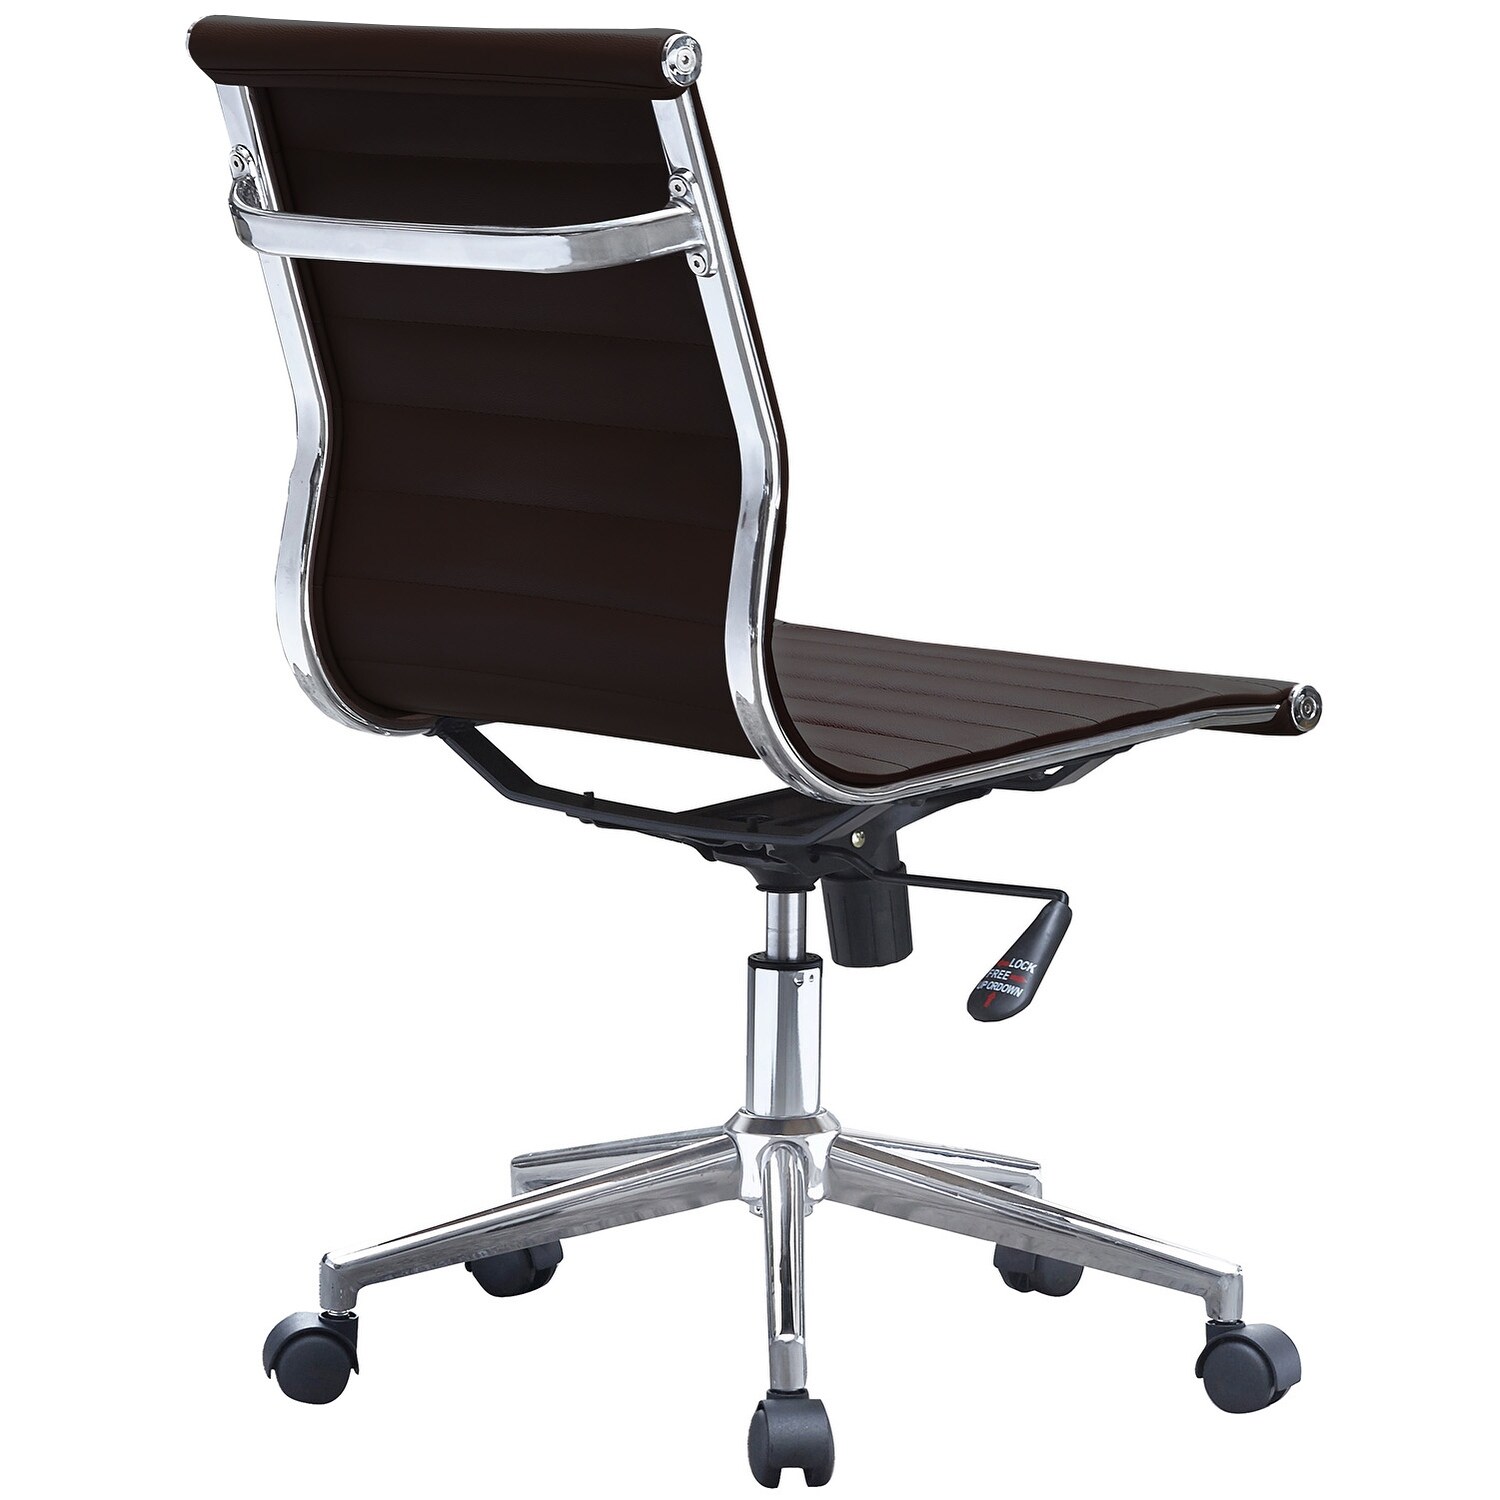 Ergonomic Bonded Leather Computer Chair with Adjustable Tilt Tension Padded Armrests Red Barrel Studio Upholstery Color: Dark Brown